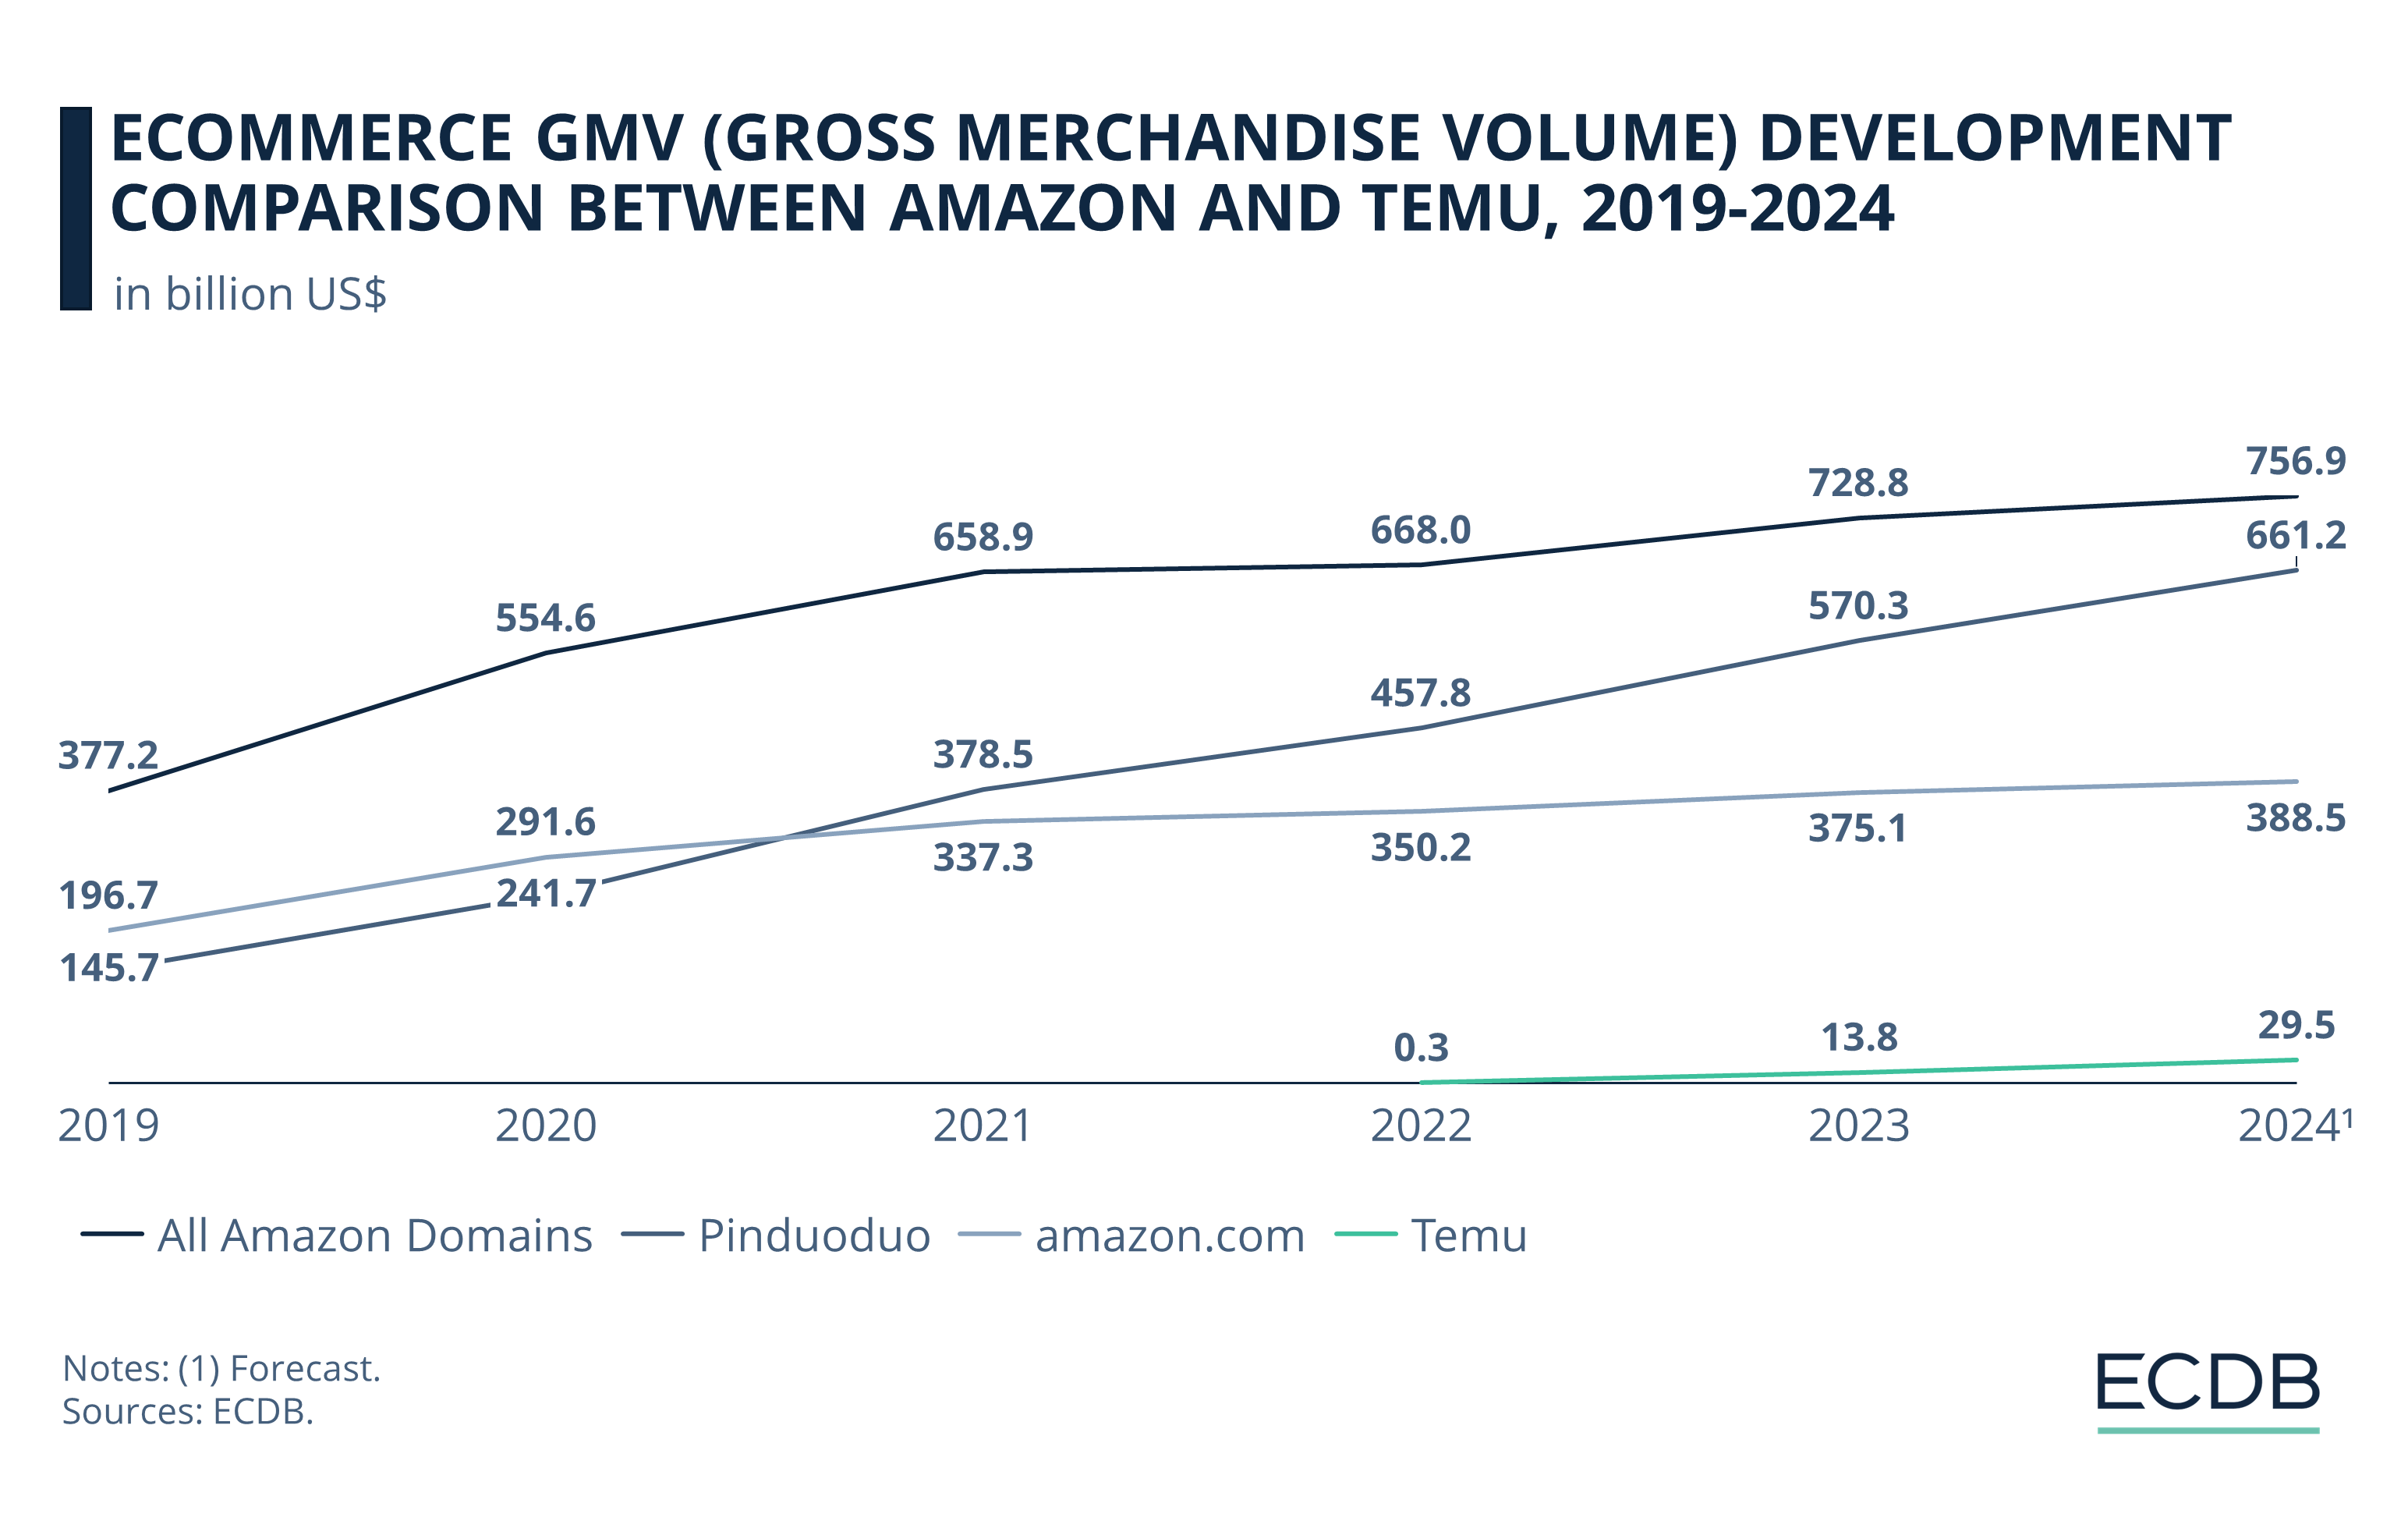 eCommerce GMV (Gross Merchandise Volume) Development Comparison Between Amazon and Temu, 2019-2024